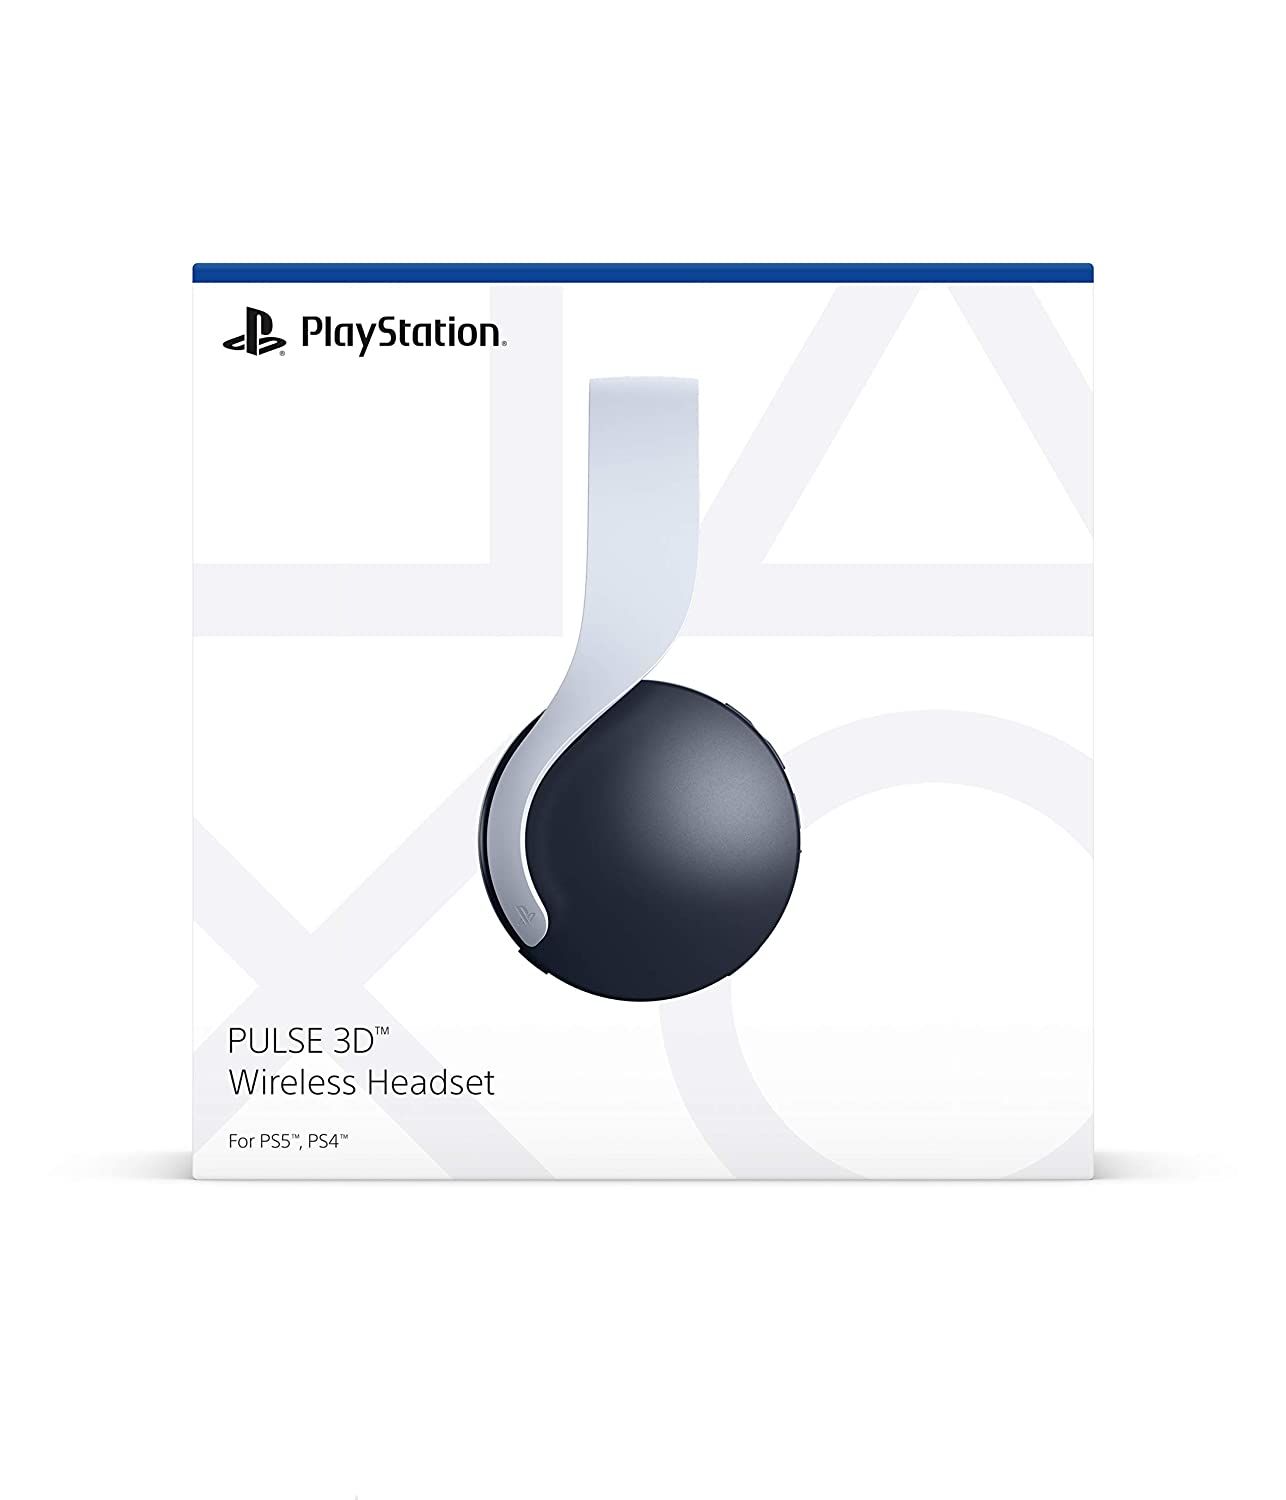 PlayStation Pulse 3D Wireless Headset Box